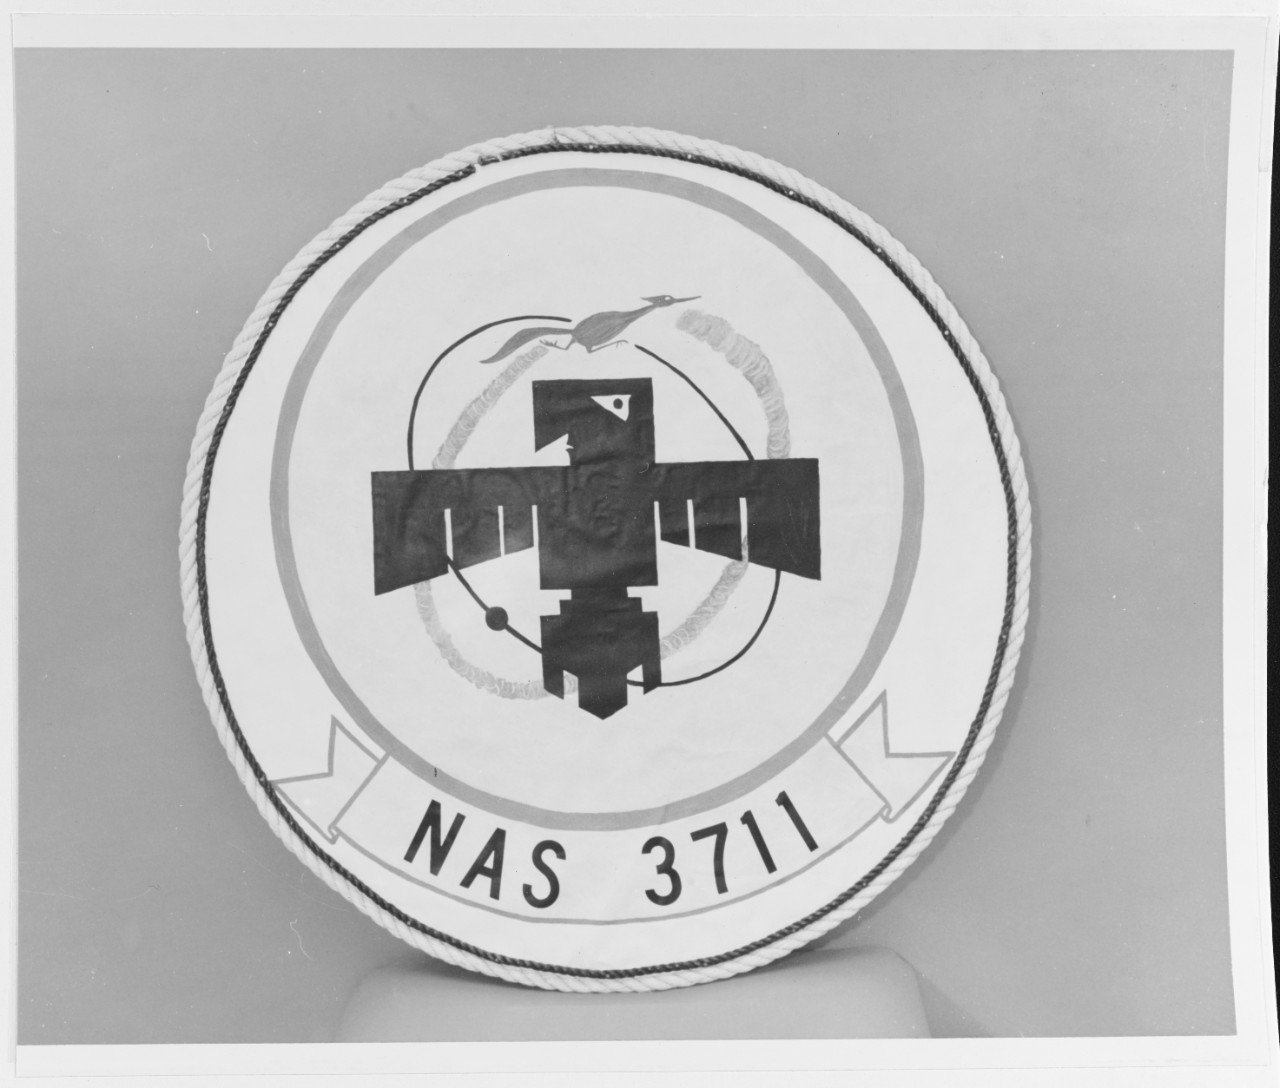 Insignia: Naval Air Station 3711